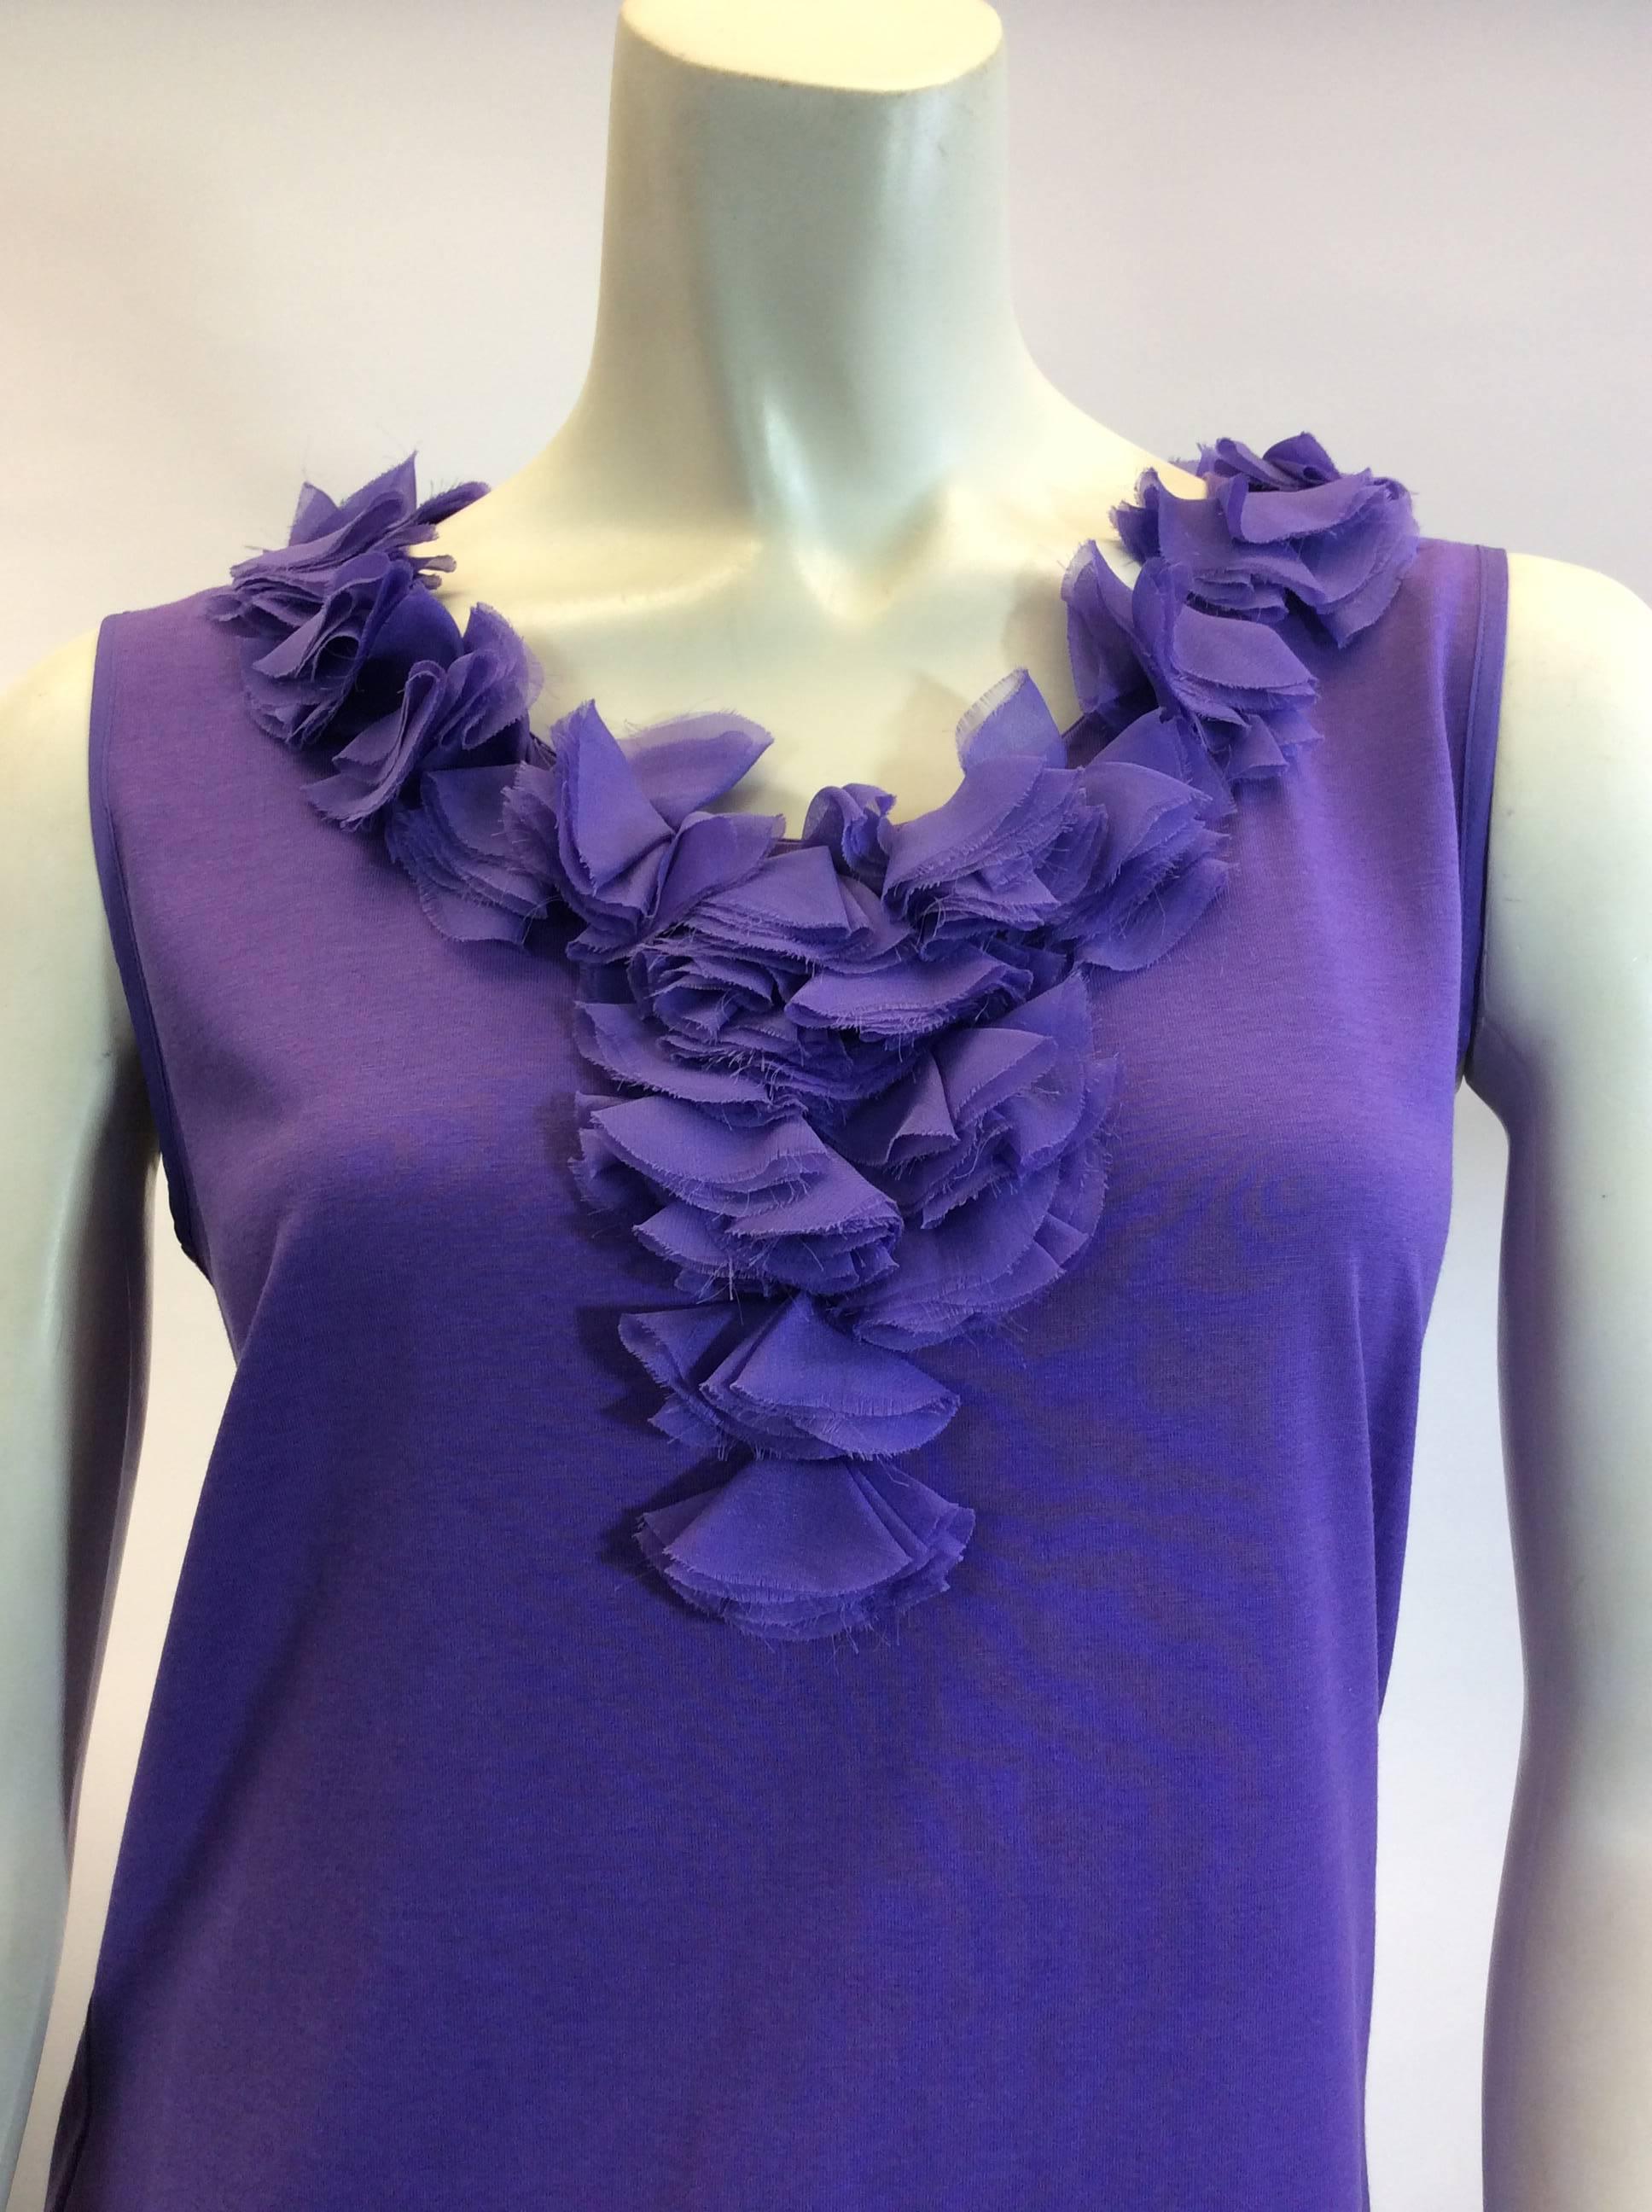 Carolina Herrera Purple Sleeveless Top
Detailed neckline
Made with silk and cotton
Made in Venezuela
Size Medium
